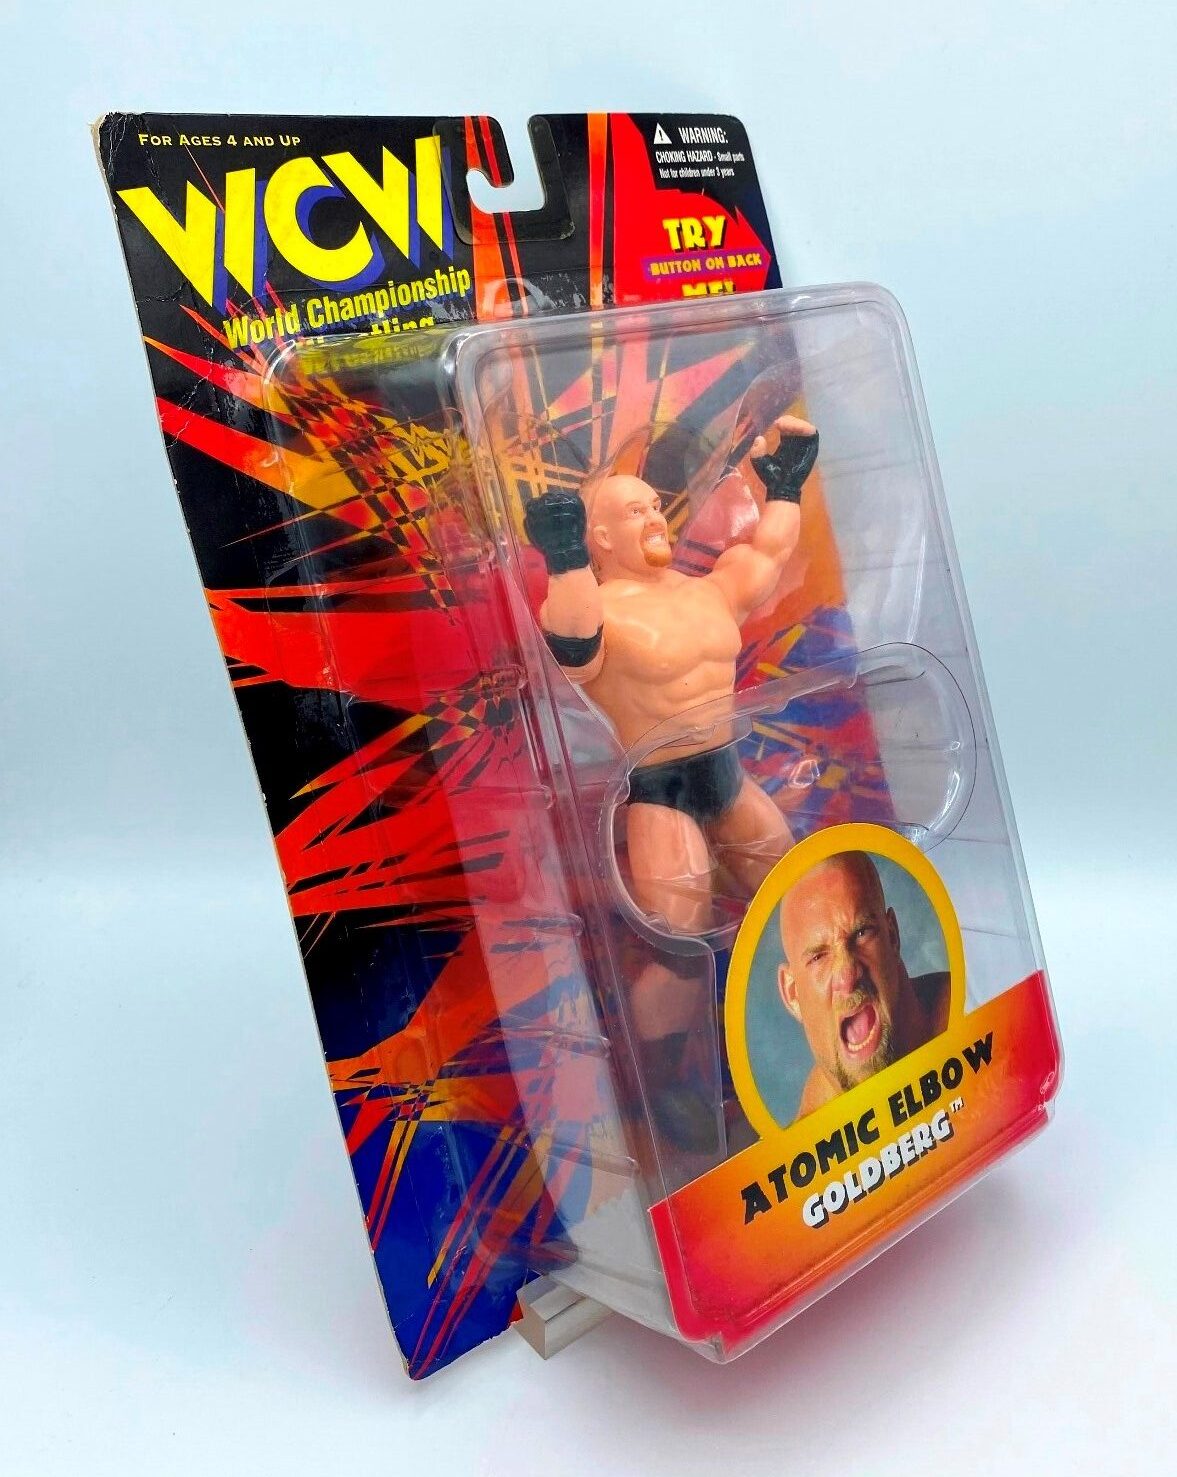 WCW WWE Wwf1998 Goldberg Atomic Elbow Wrestling Figure for sale online 